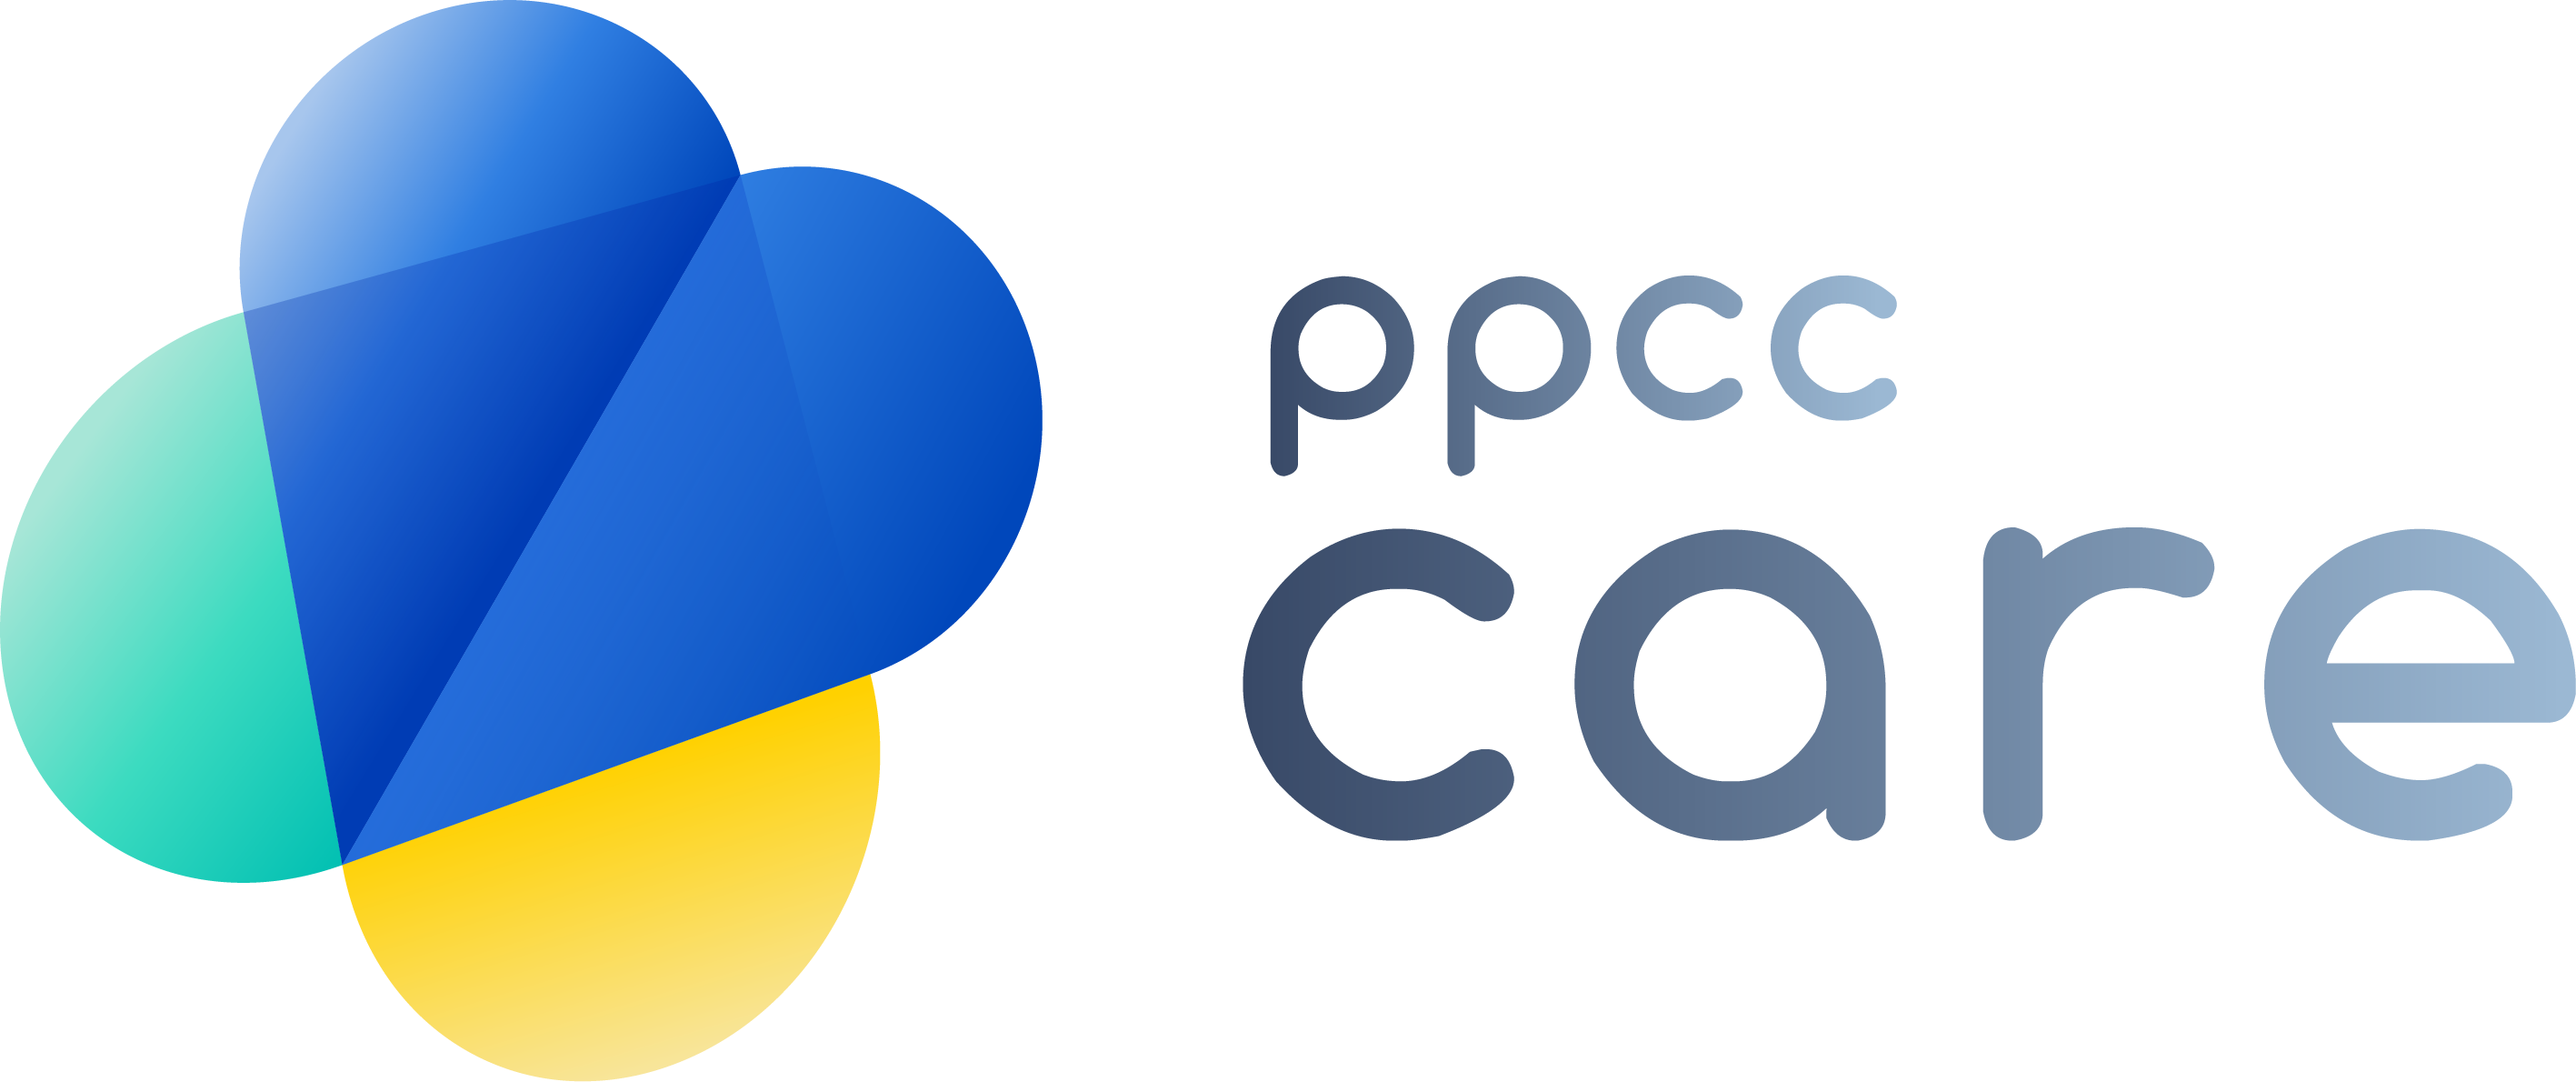 PPCC ผู้เชี่ยวชาญให้คําปรึกษา infor partner thailand